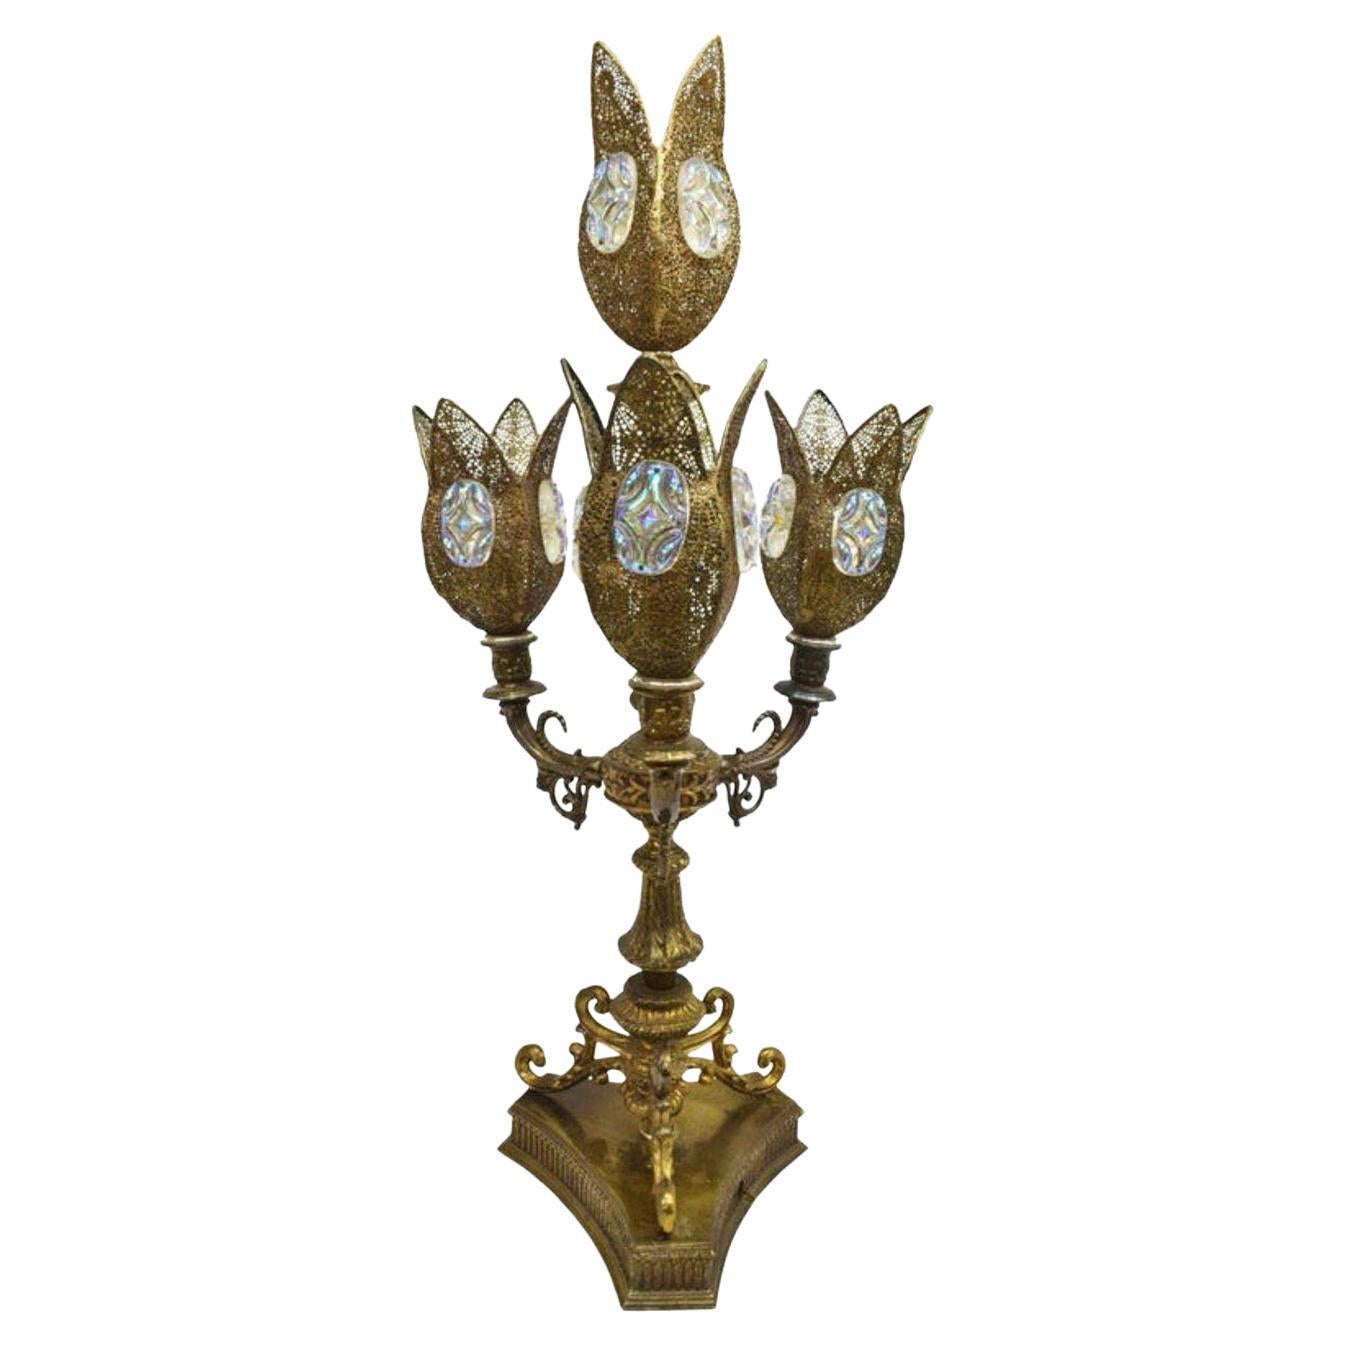 Loevsky & Loevsky Iridescent Filigree Table Lamp Candelabra